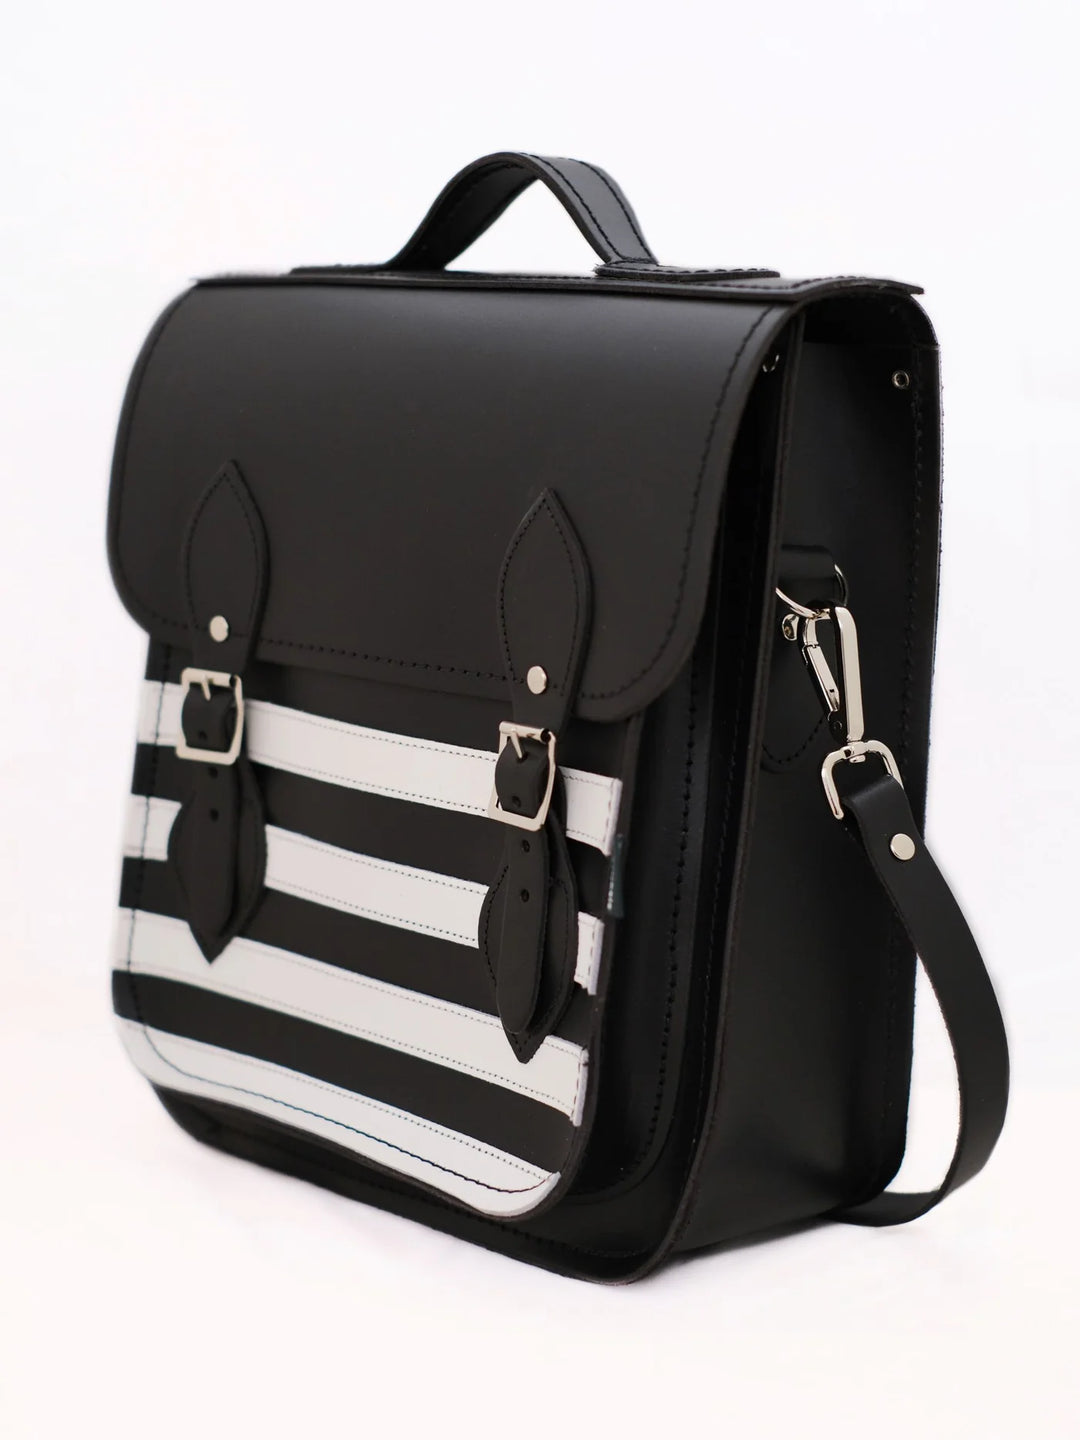 Zatchels Handmade Leather City Backpack - Gothic Black & White Stripe